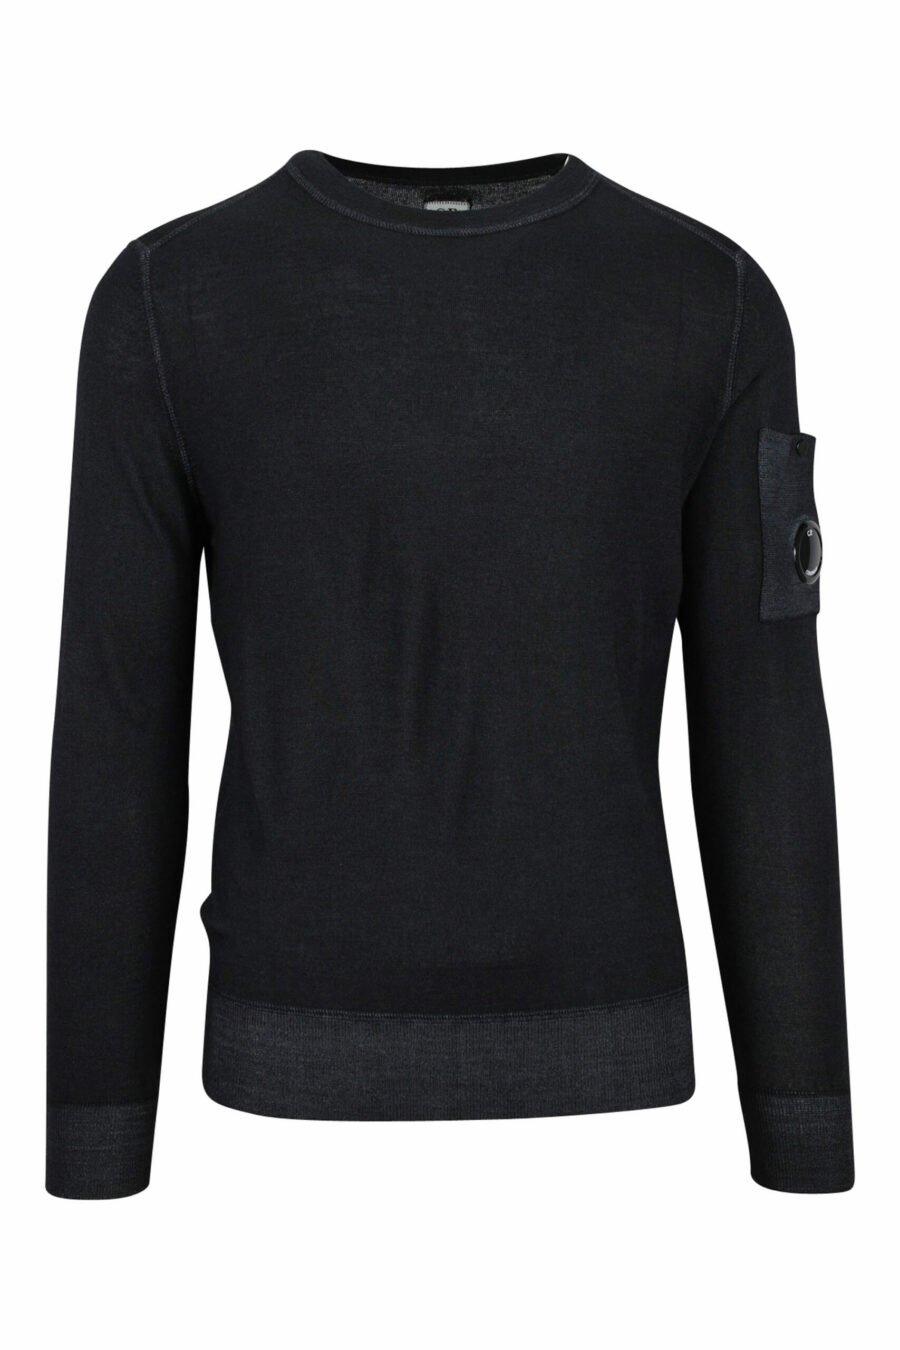 Black sweatshirt with side lens logo - 7620943583458 scaled